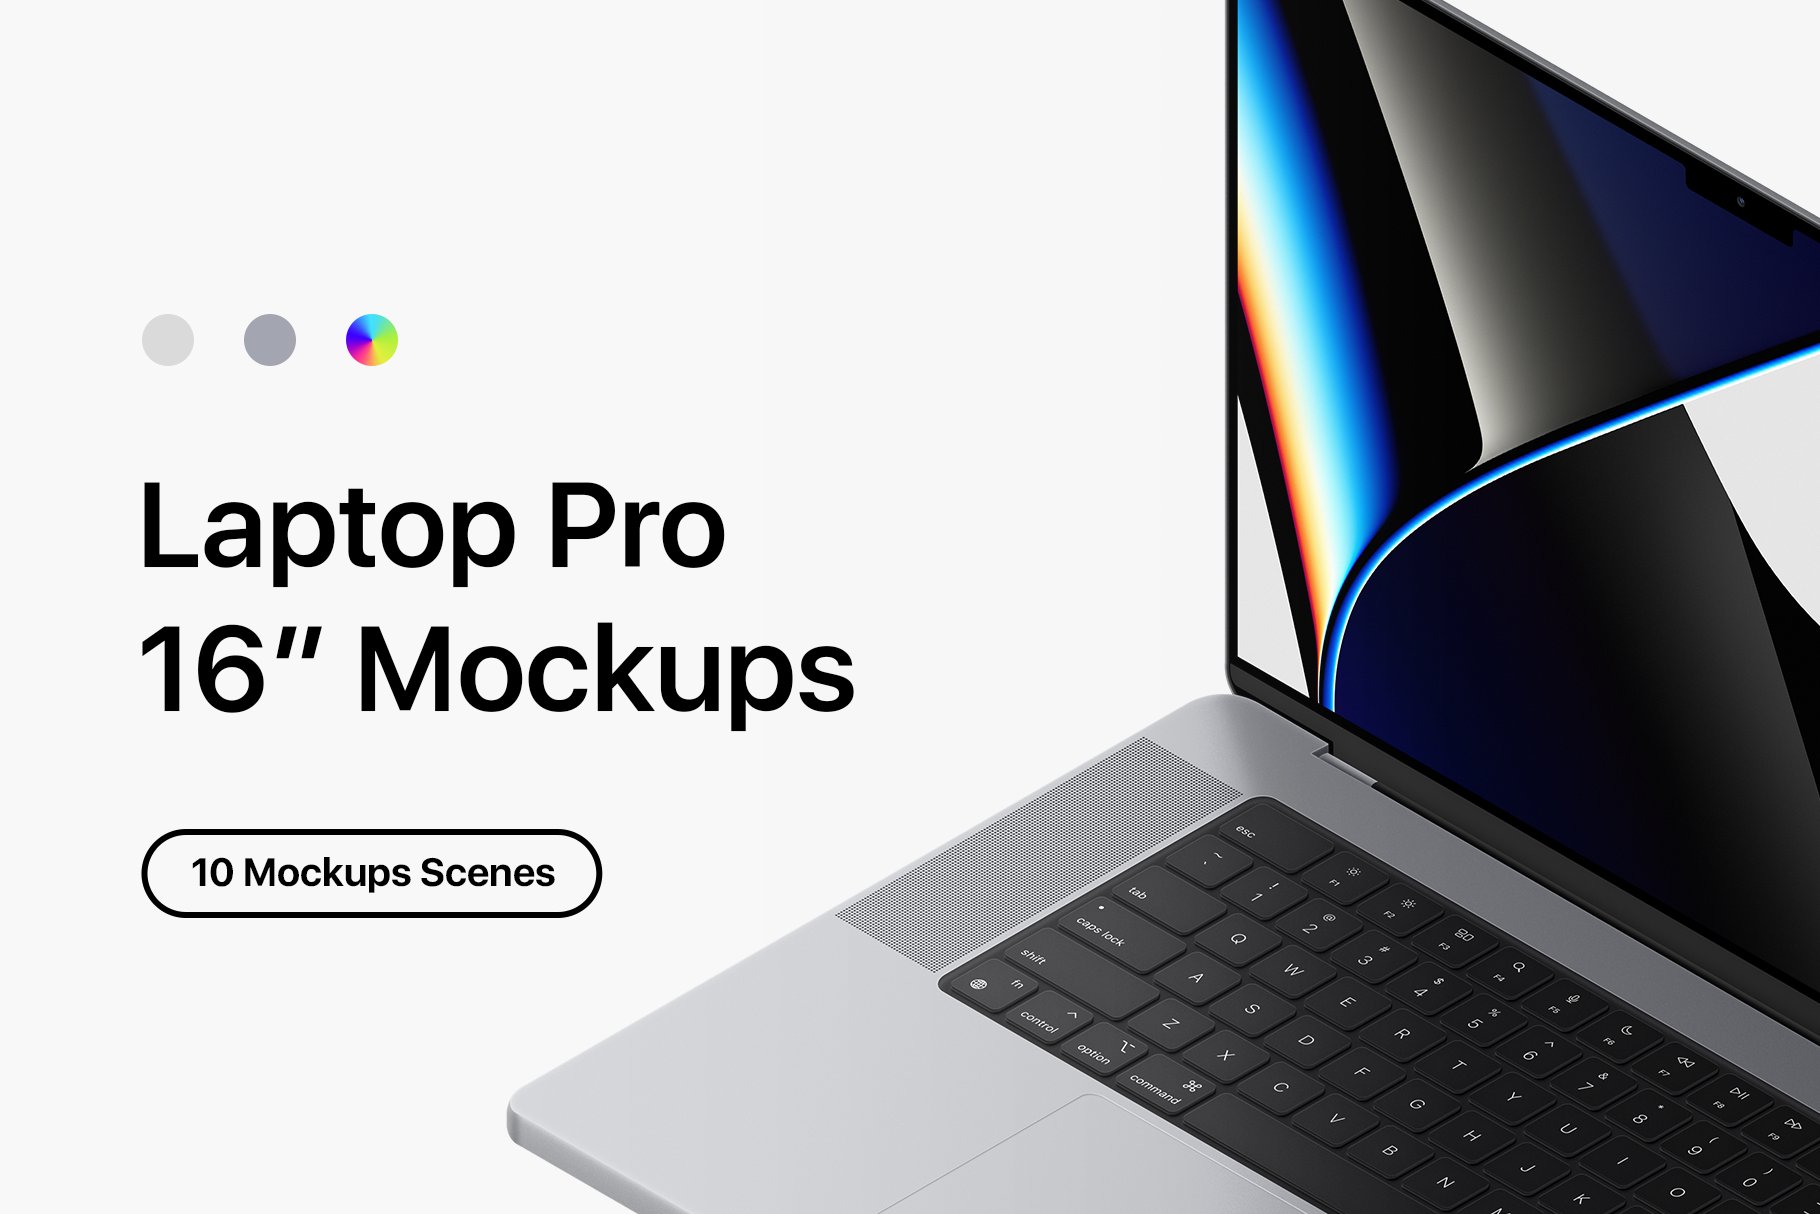 Laptop Pro 16" - 10 Mockups Scenes cover image.